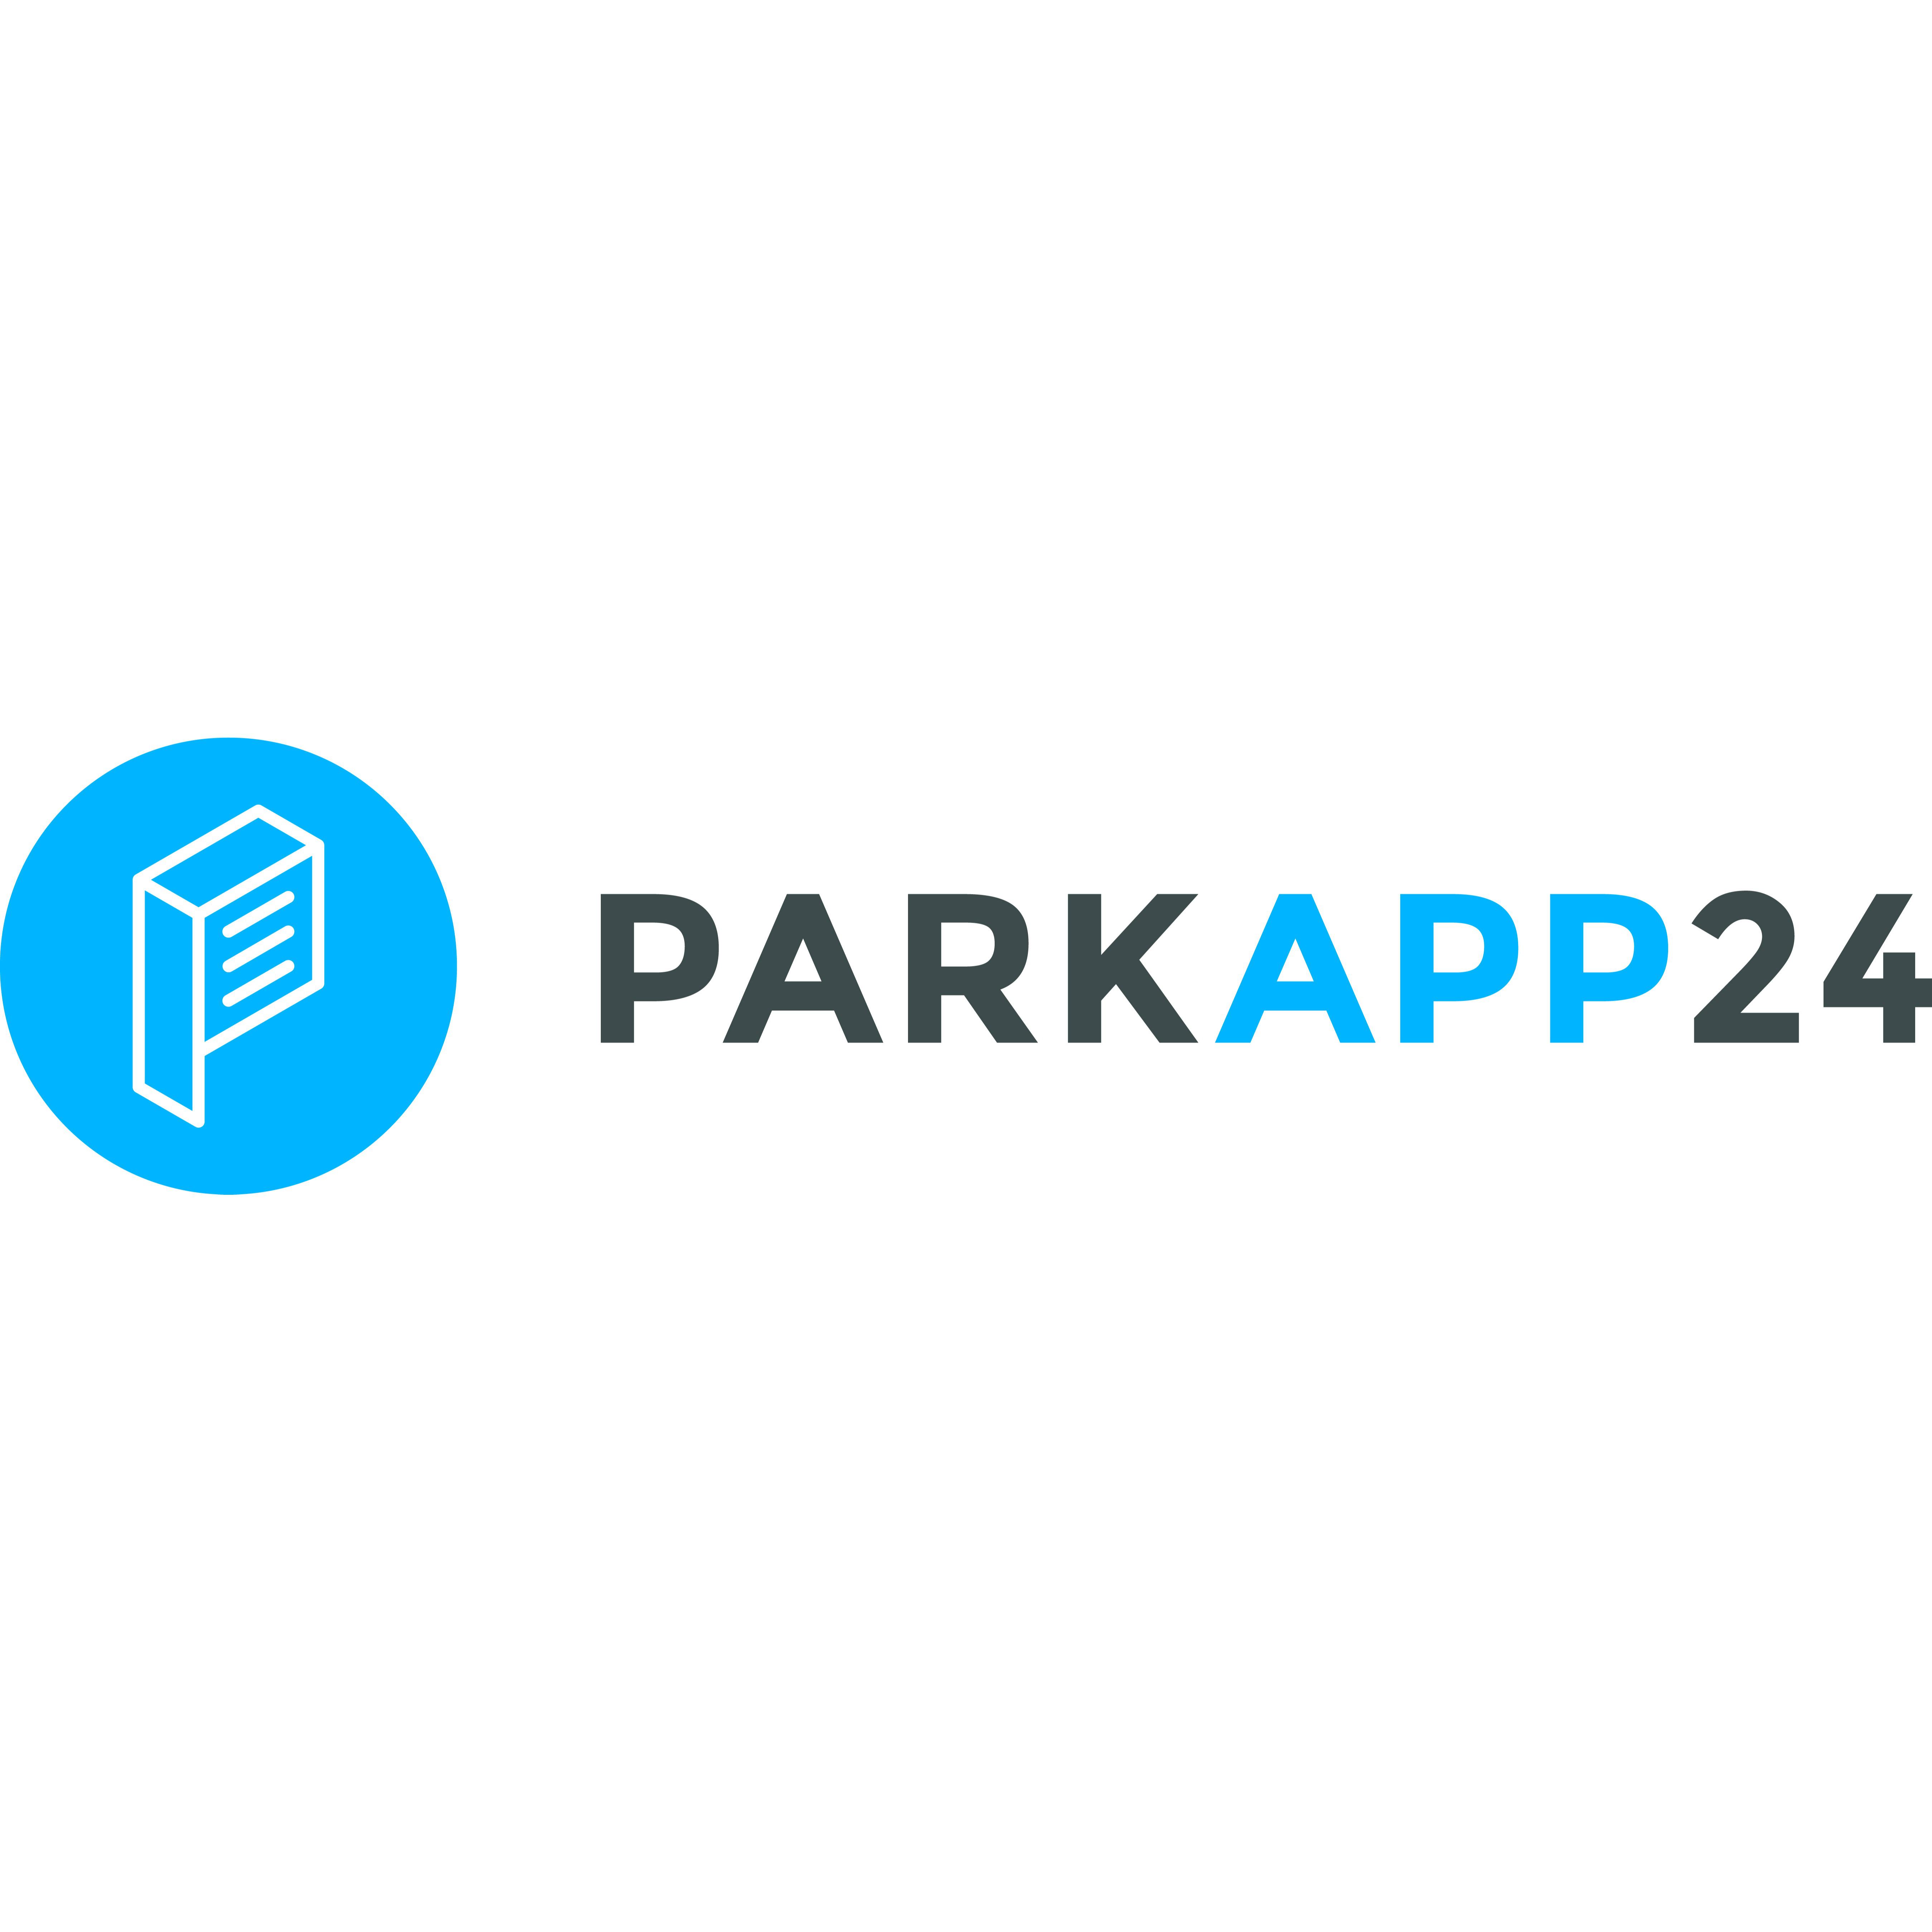 Parkapp24 in Dresden - Logo